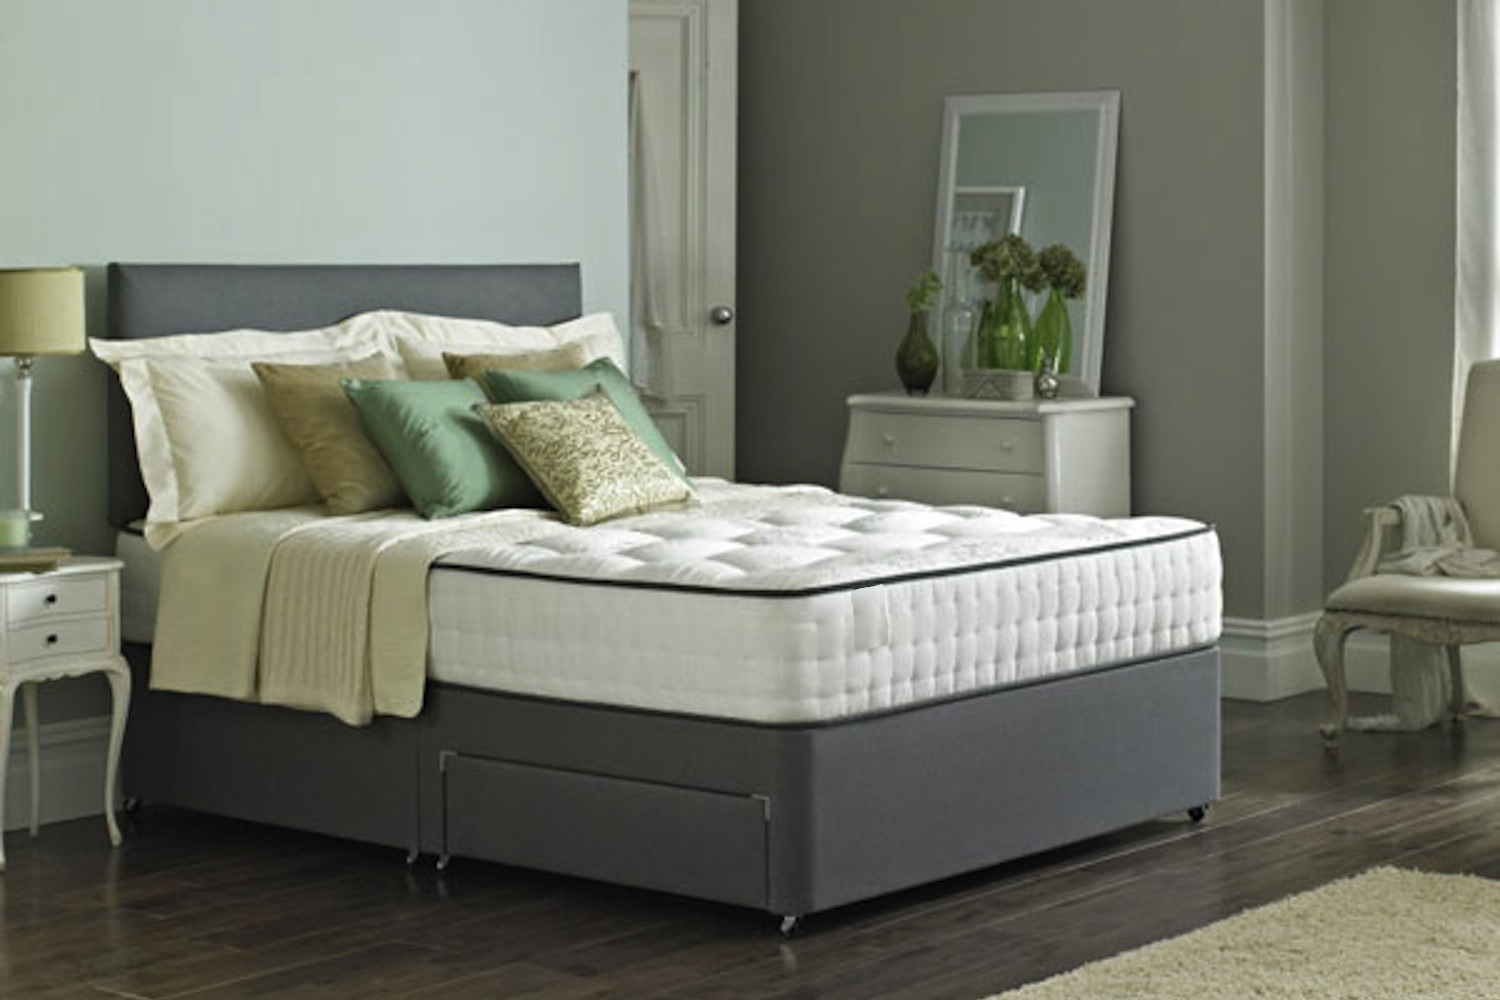 beds and mattress sale uk